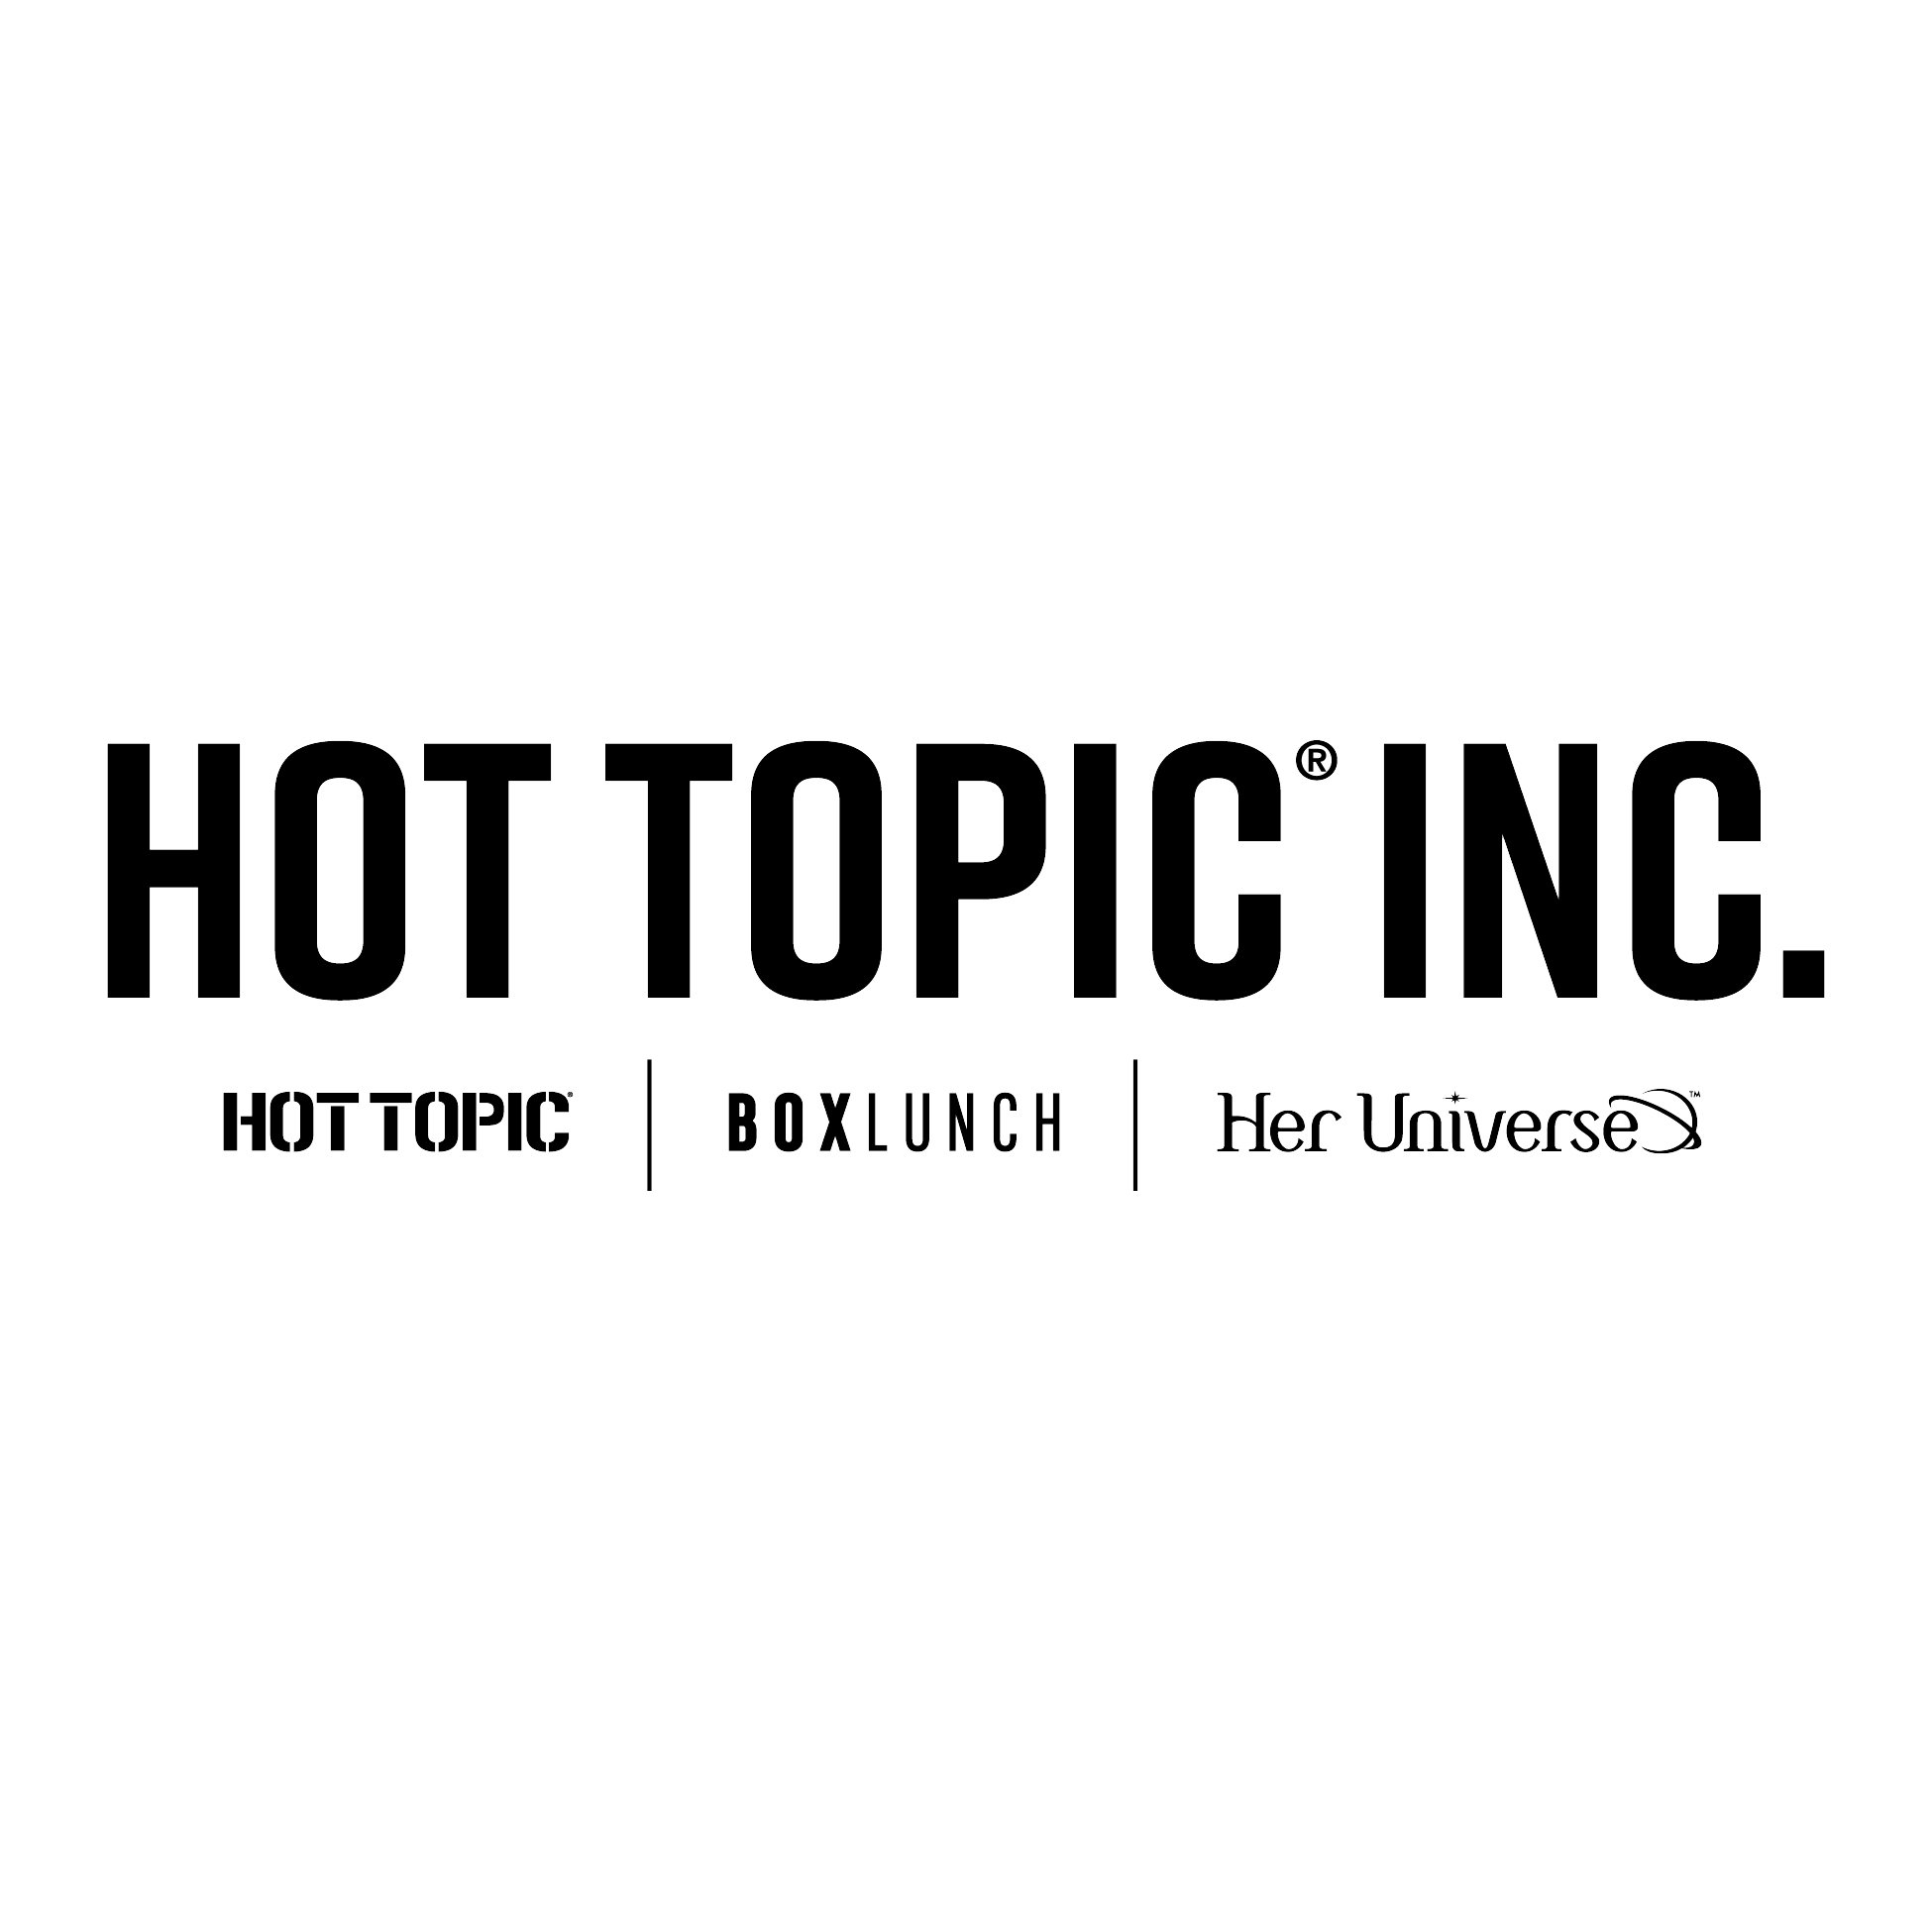 Hot Topic Inc.